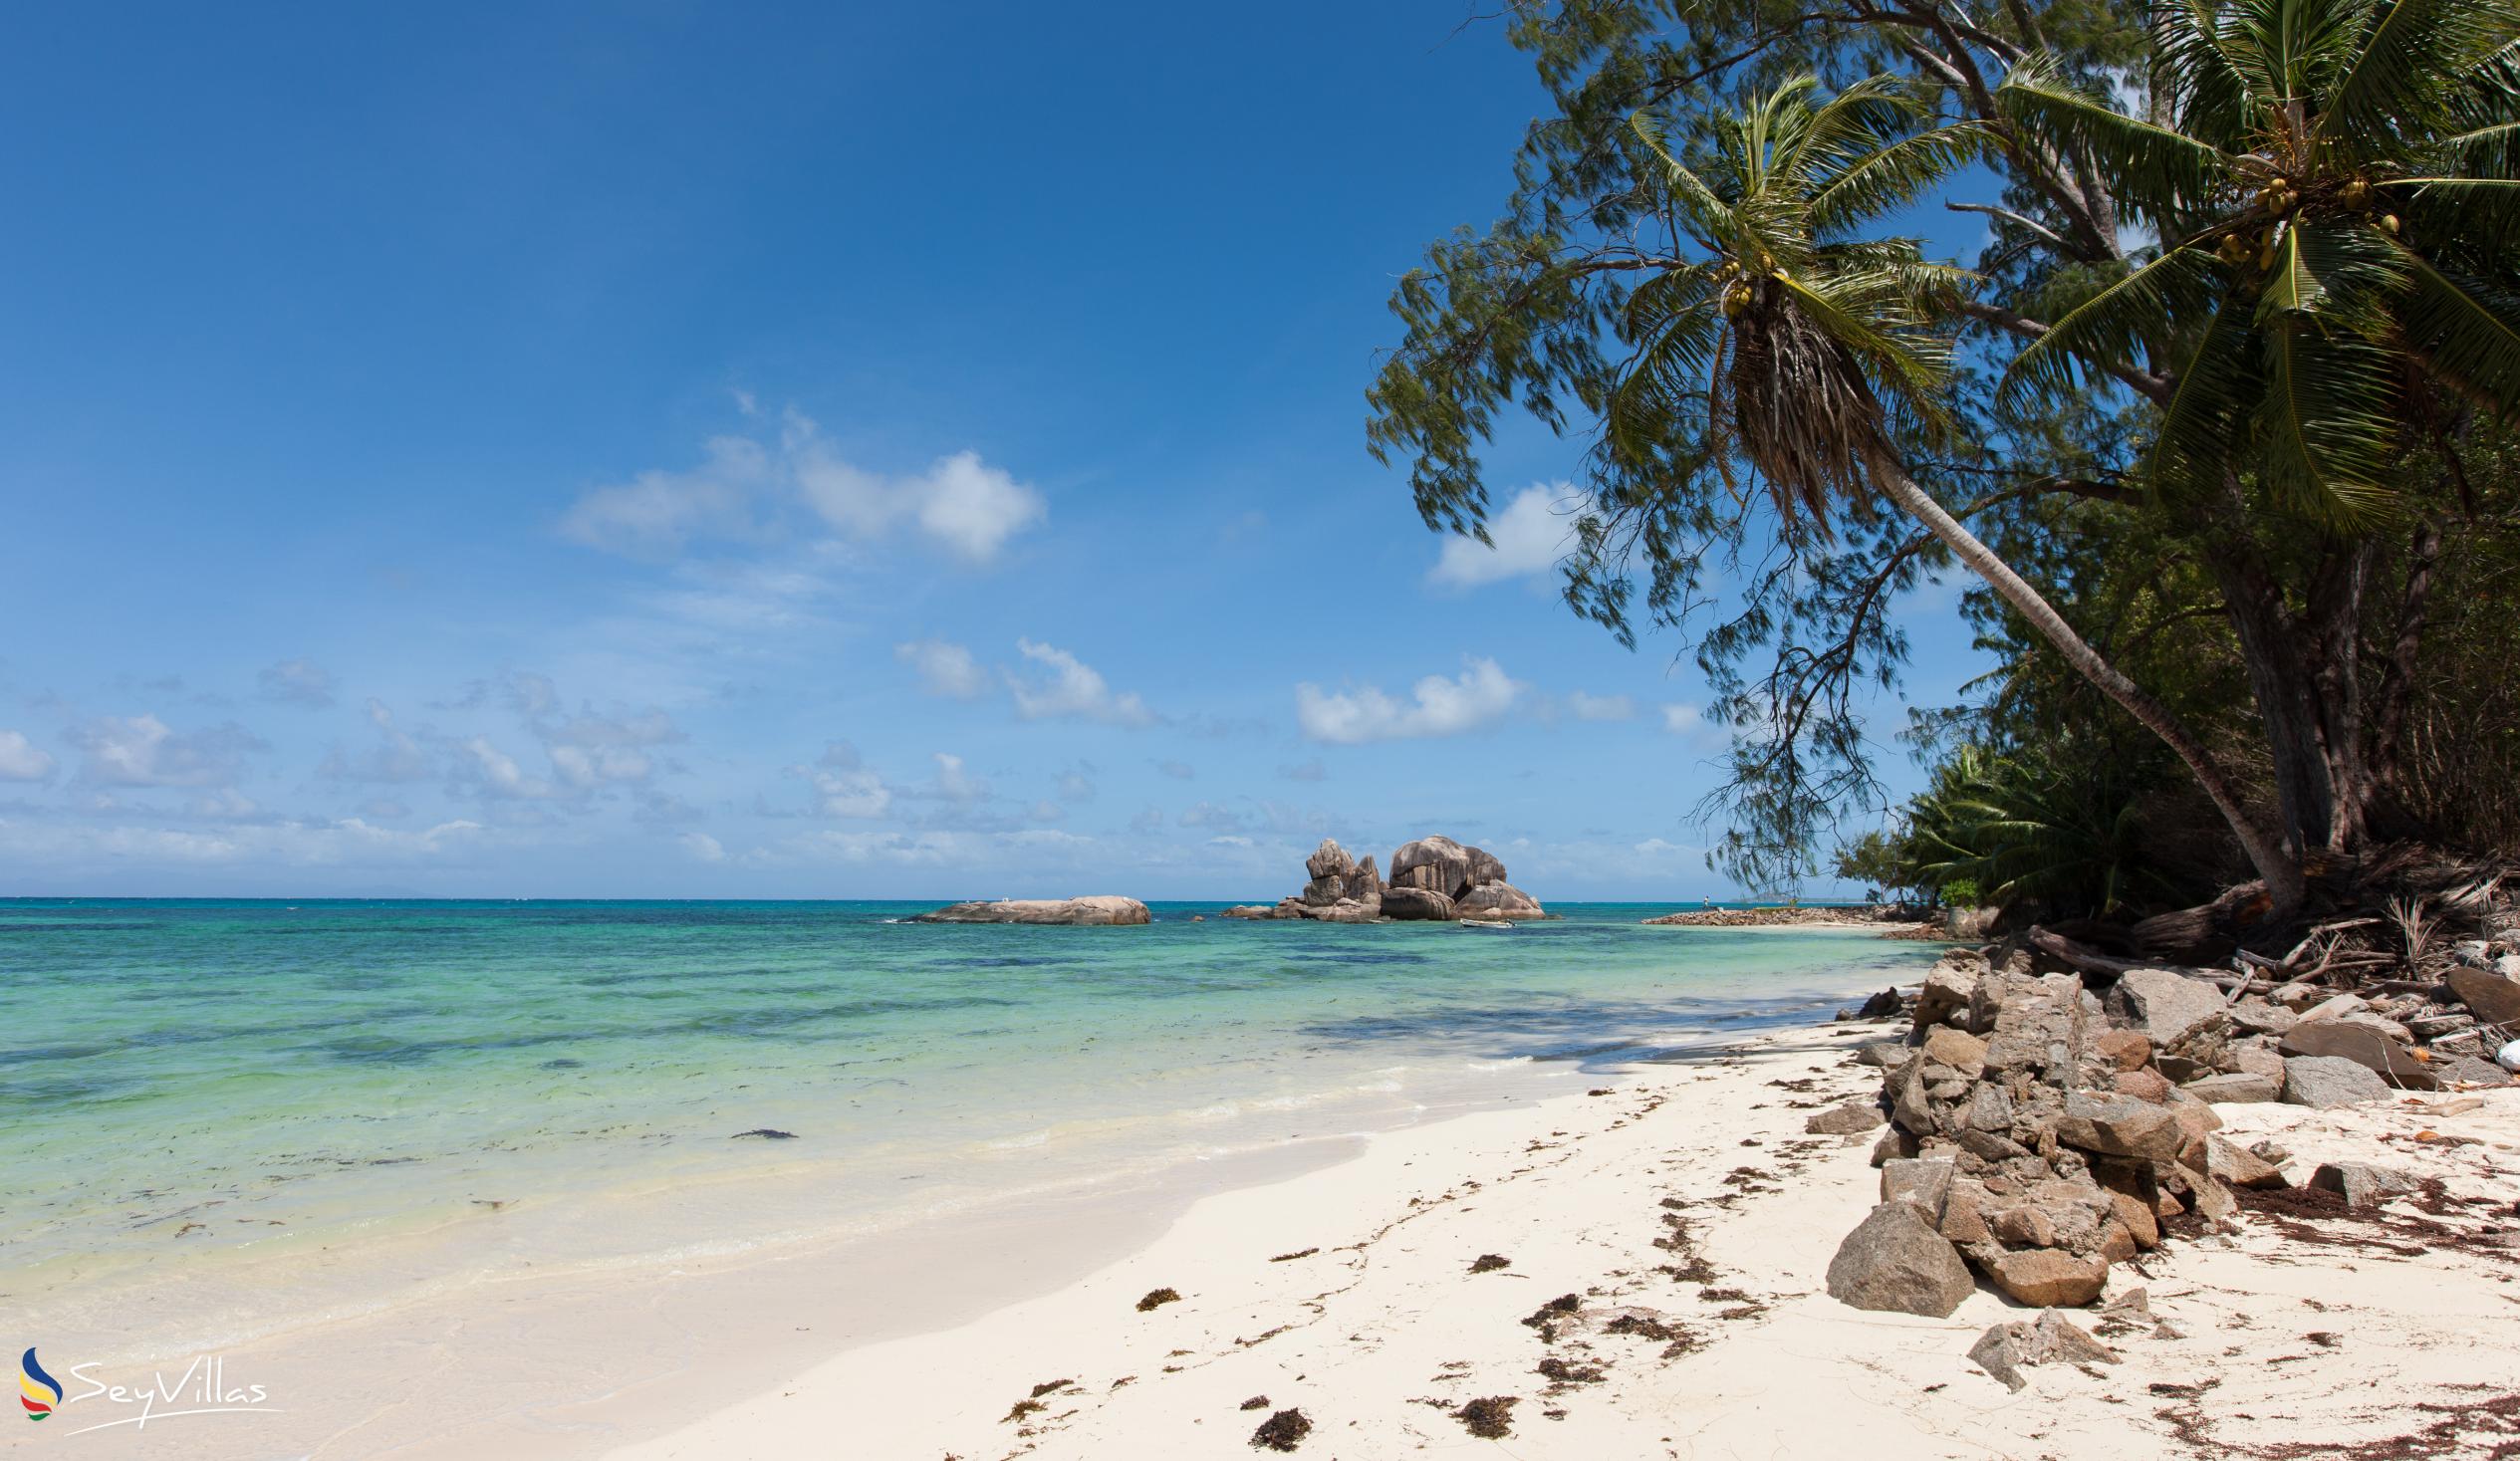 Photo 25: YASAD Luxury Beach Residence - Location - Praslin (Seychelles)